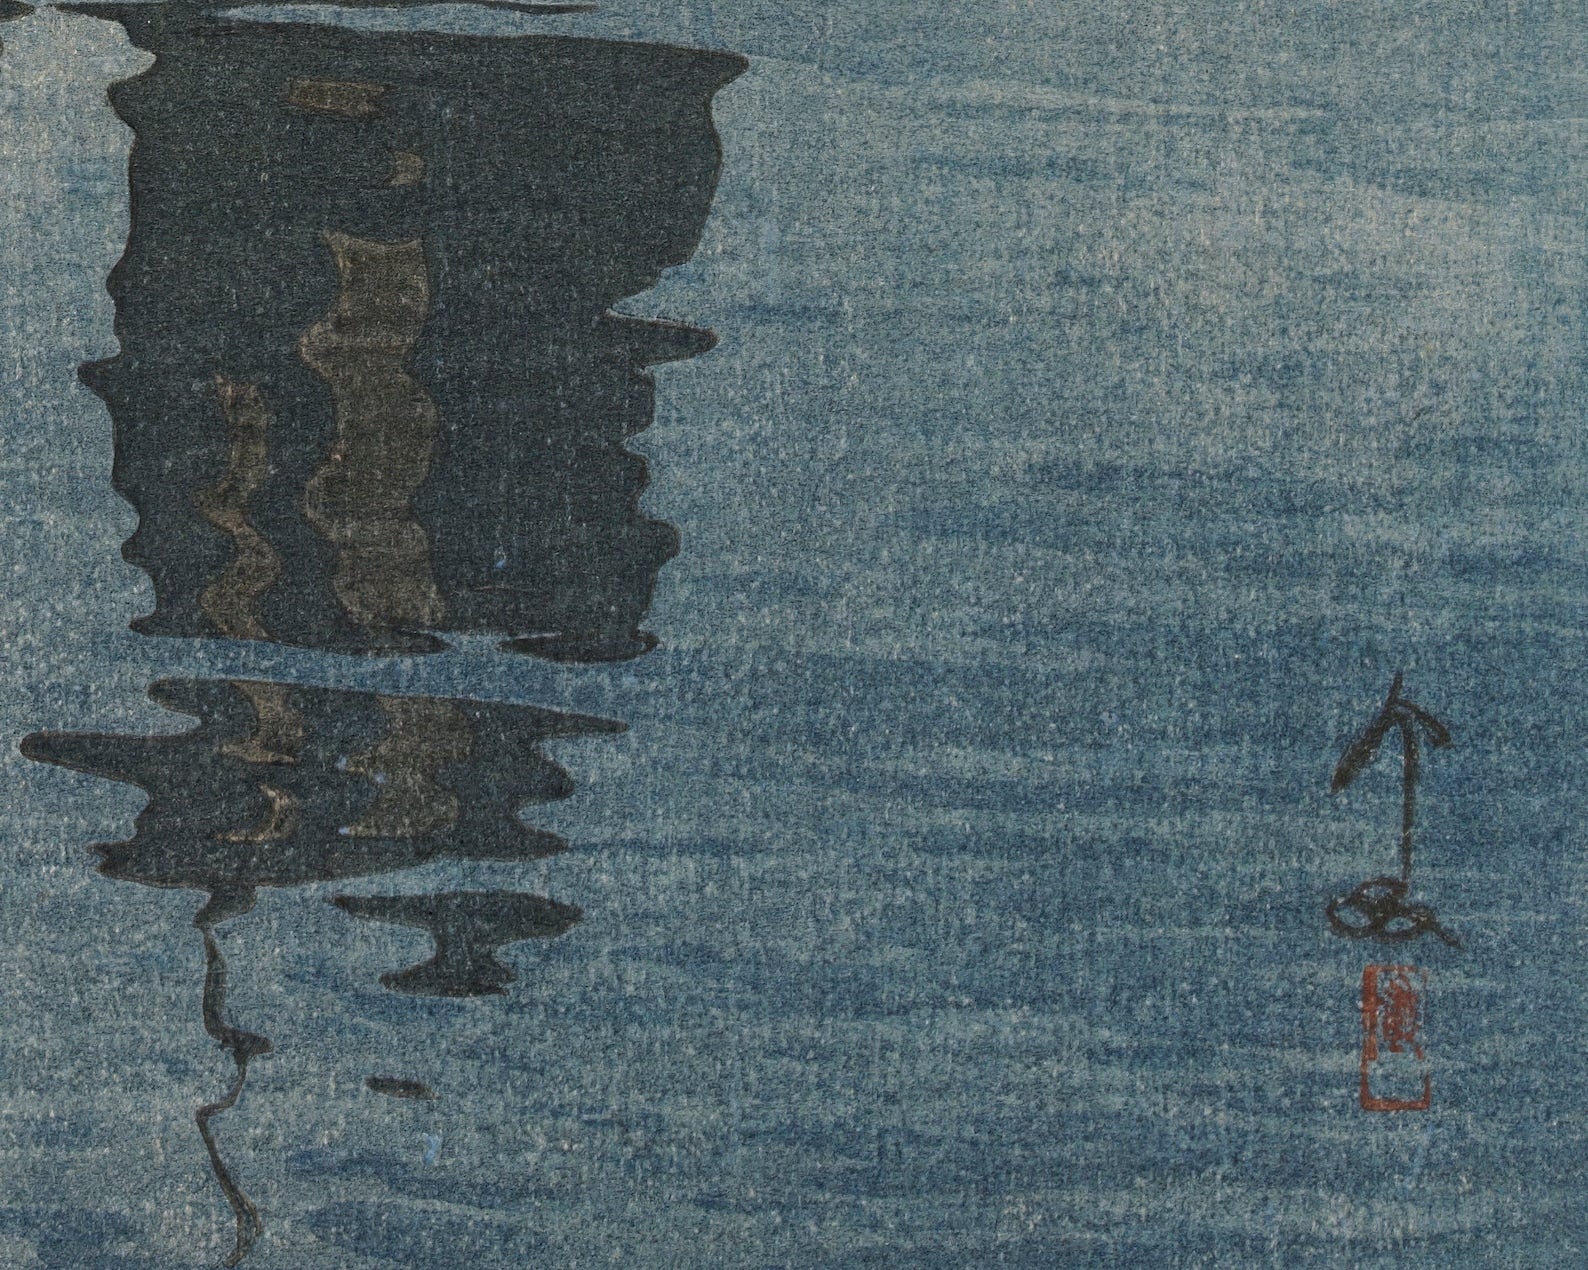 Hiroshi Yoshida “Sailboats, Forenoon” (c.1926) - Mabon Gallery